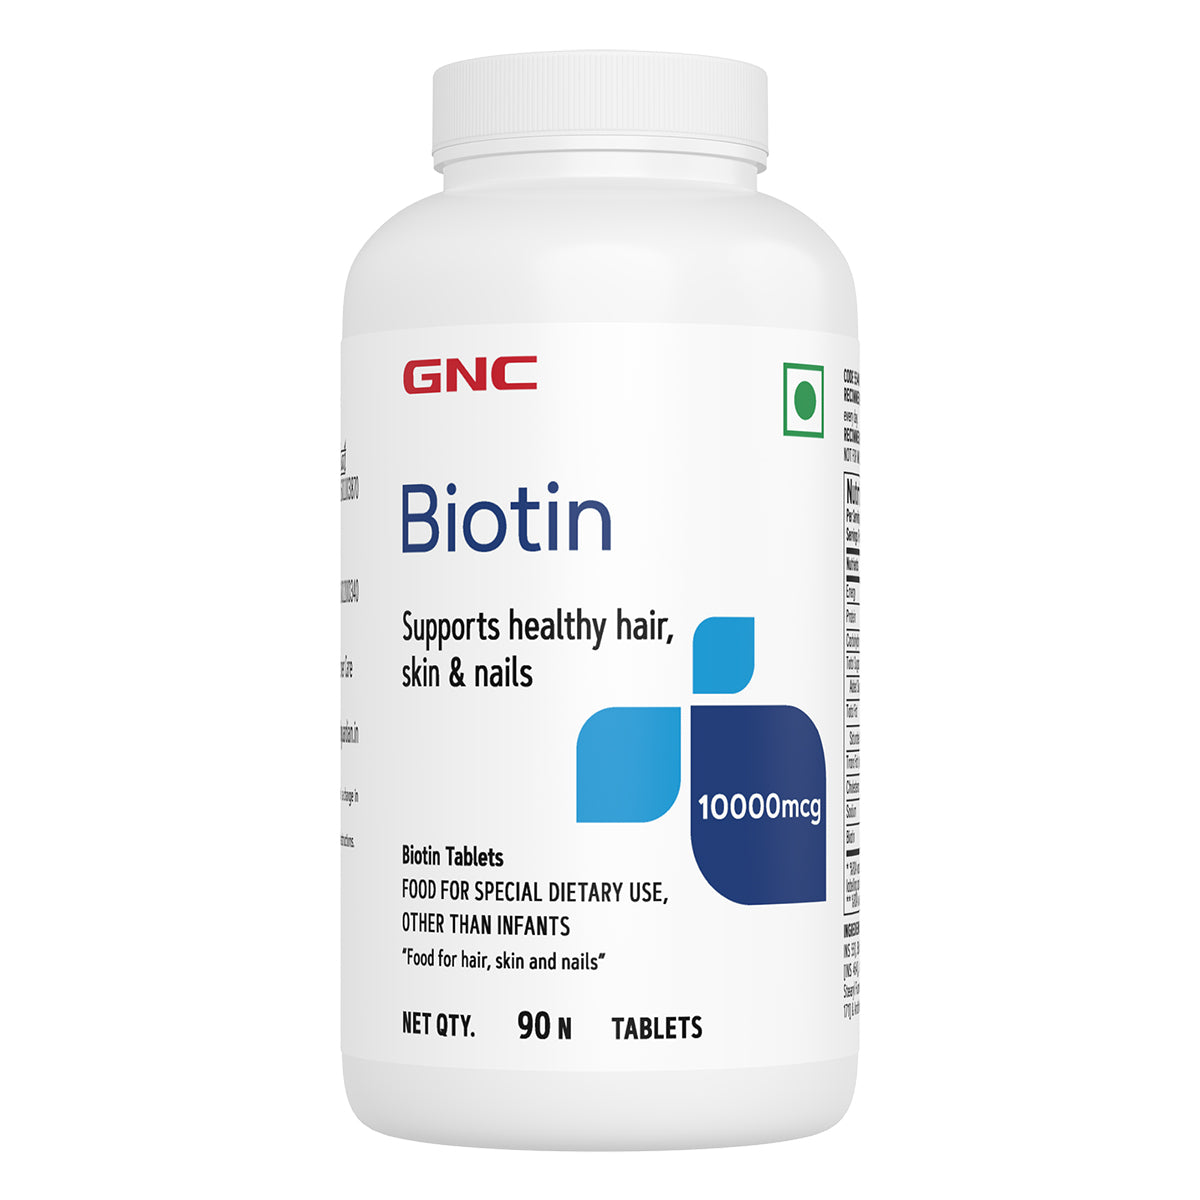 GNC Biotin 10,000mcg - Reduces Hair Fall & Promotes New Hair Growth